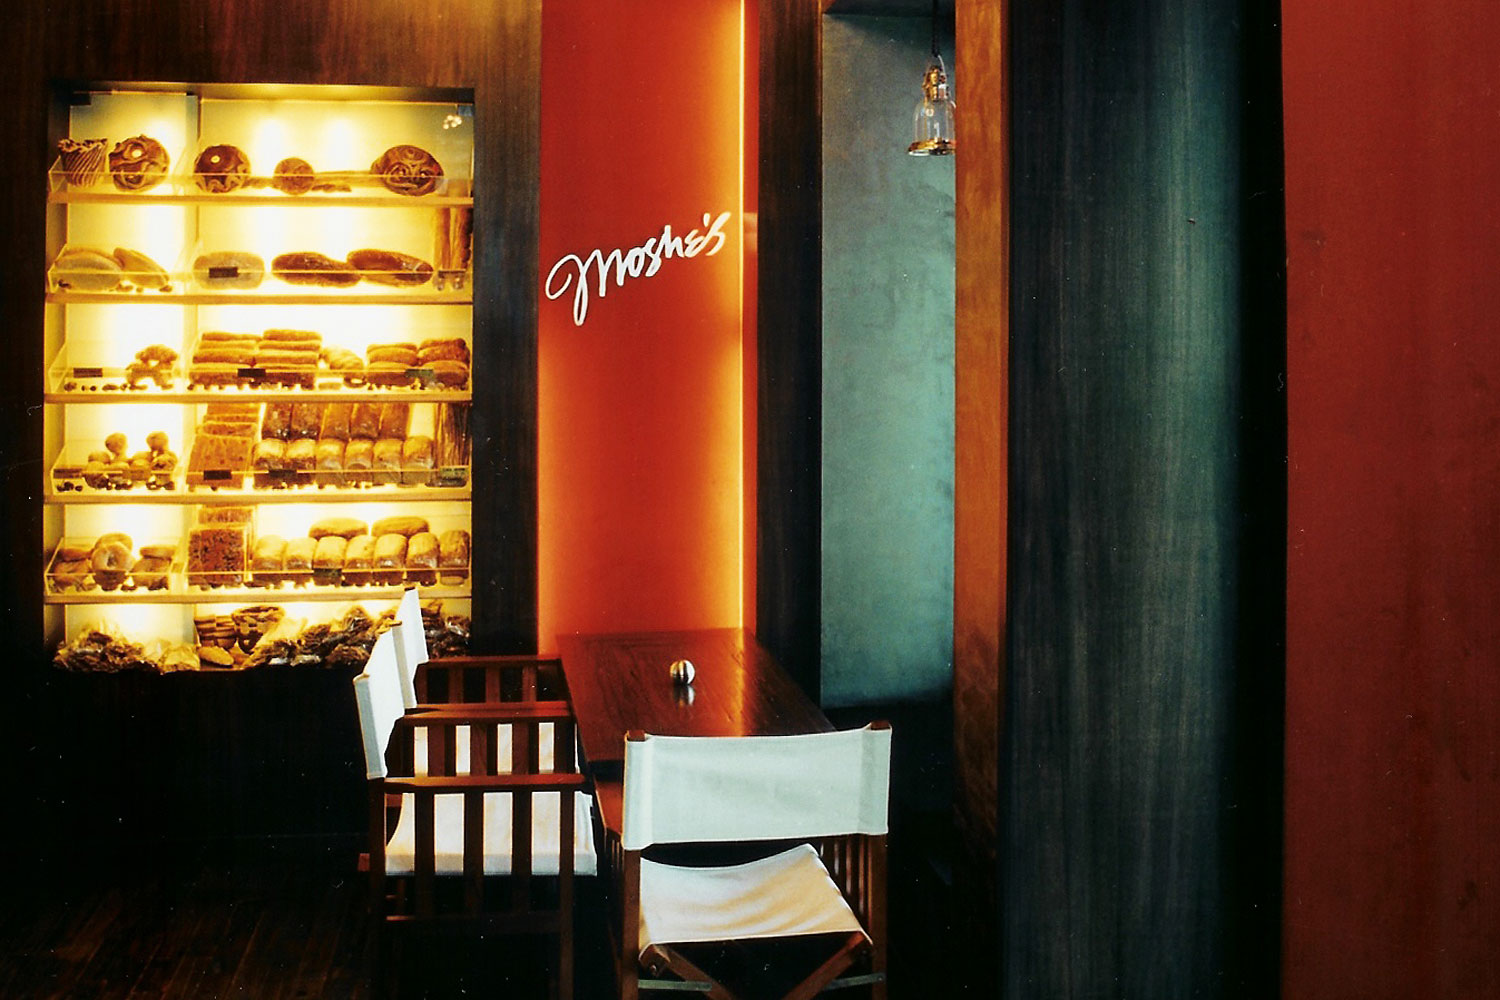 Moshes pet friendly restaurant mumbai